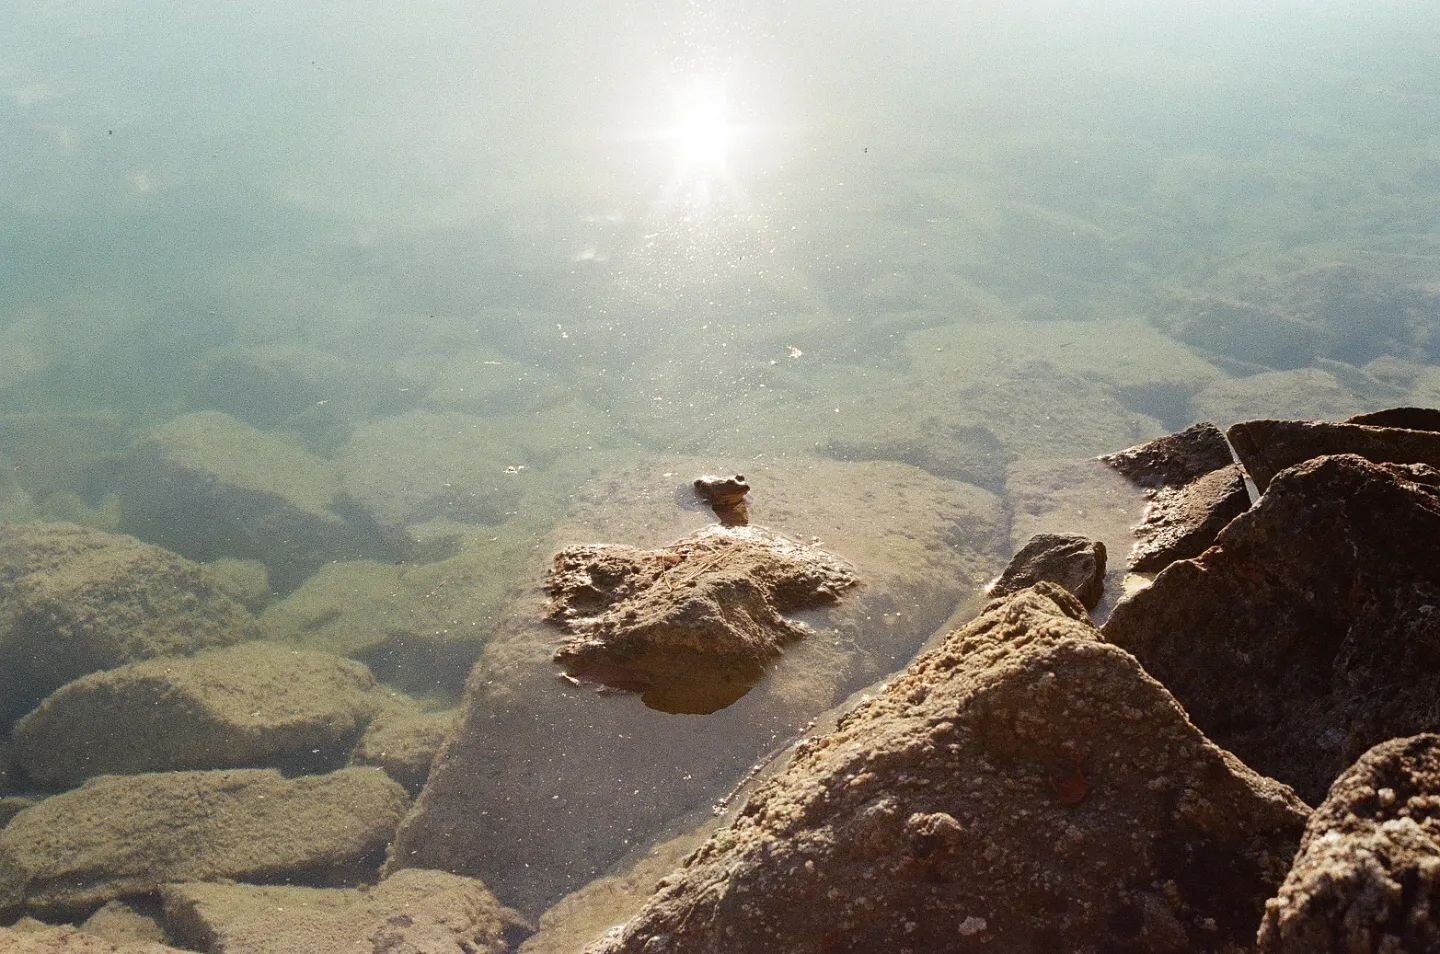 Frog on a rock

Shot on Yashica FX-3, 35mm Kodak Portra 400

Processed and scanned by @gpclabworks 

#filmisalive #frog #gatineaupark #35mm